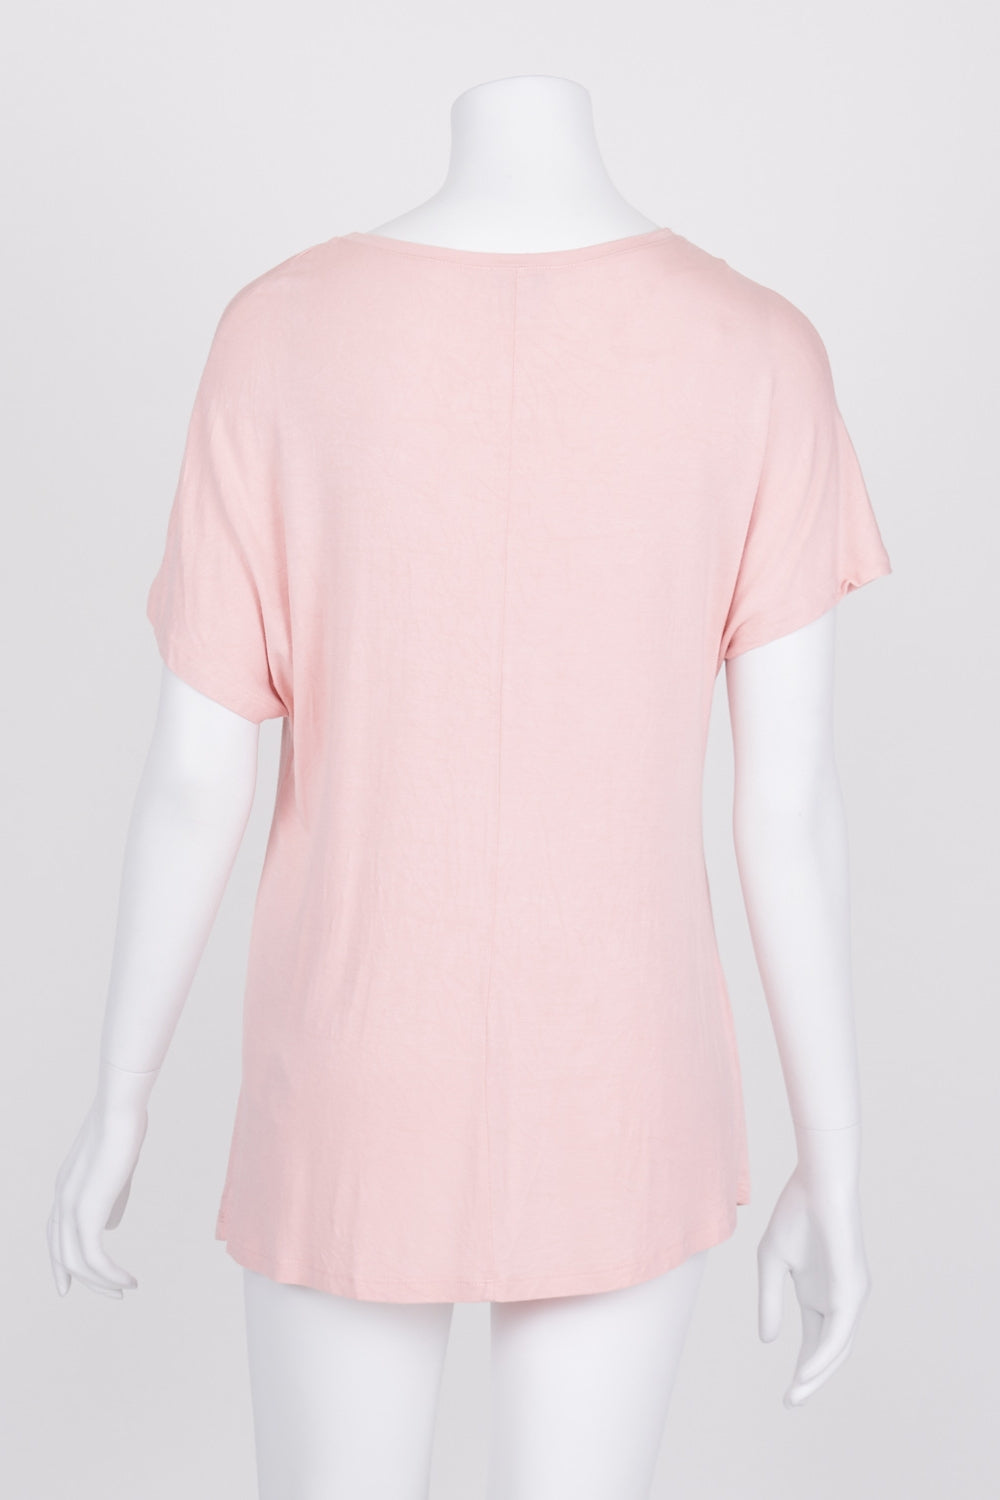 Amisu Pink Pearl Front T-Shirt S